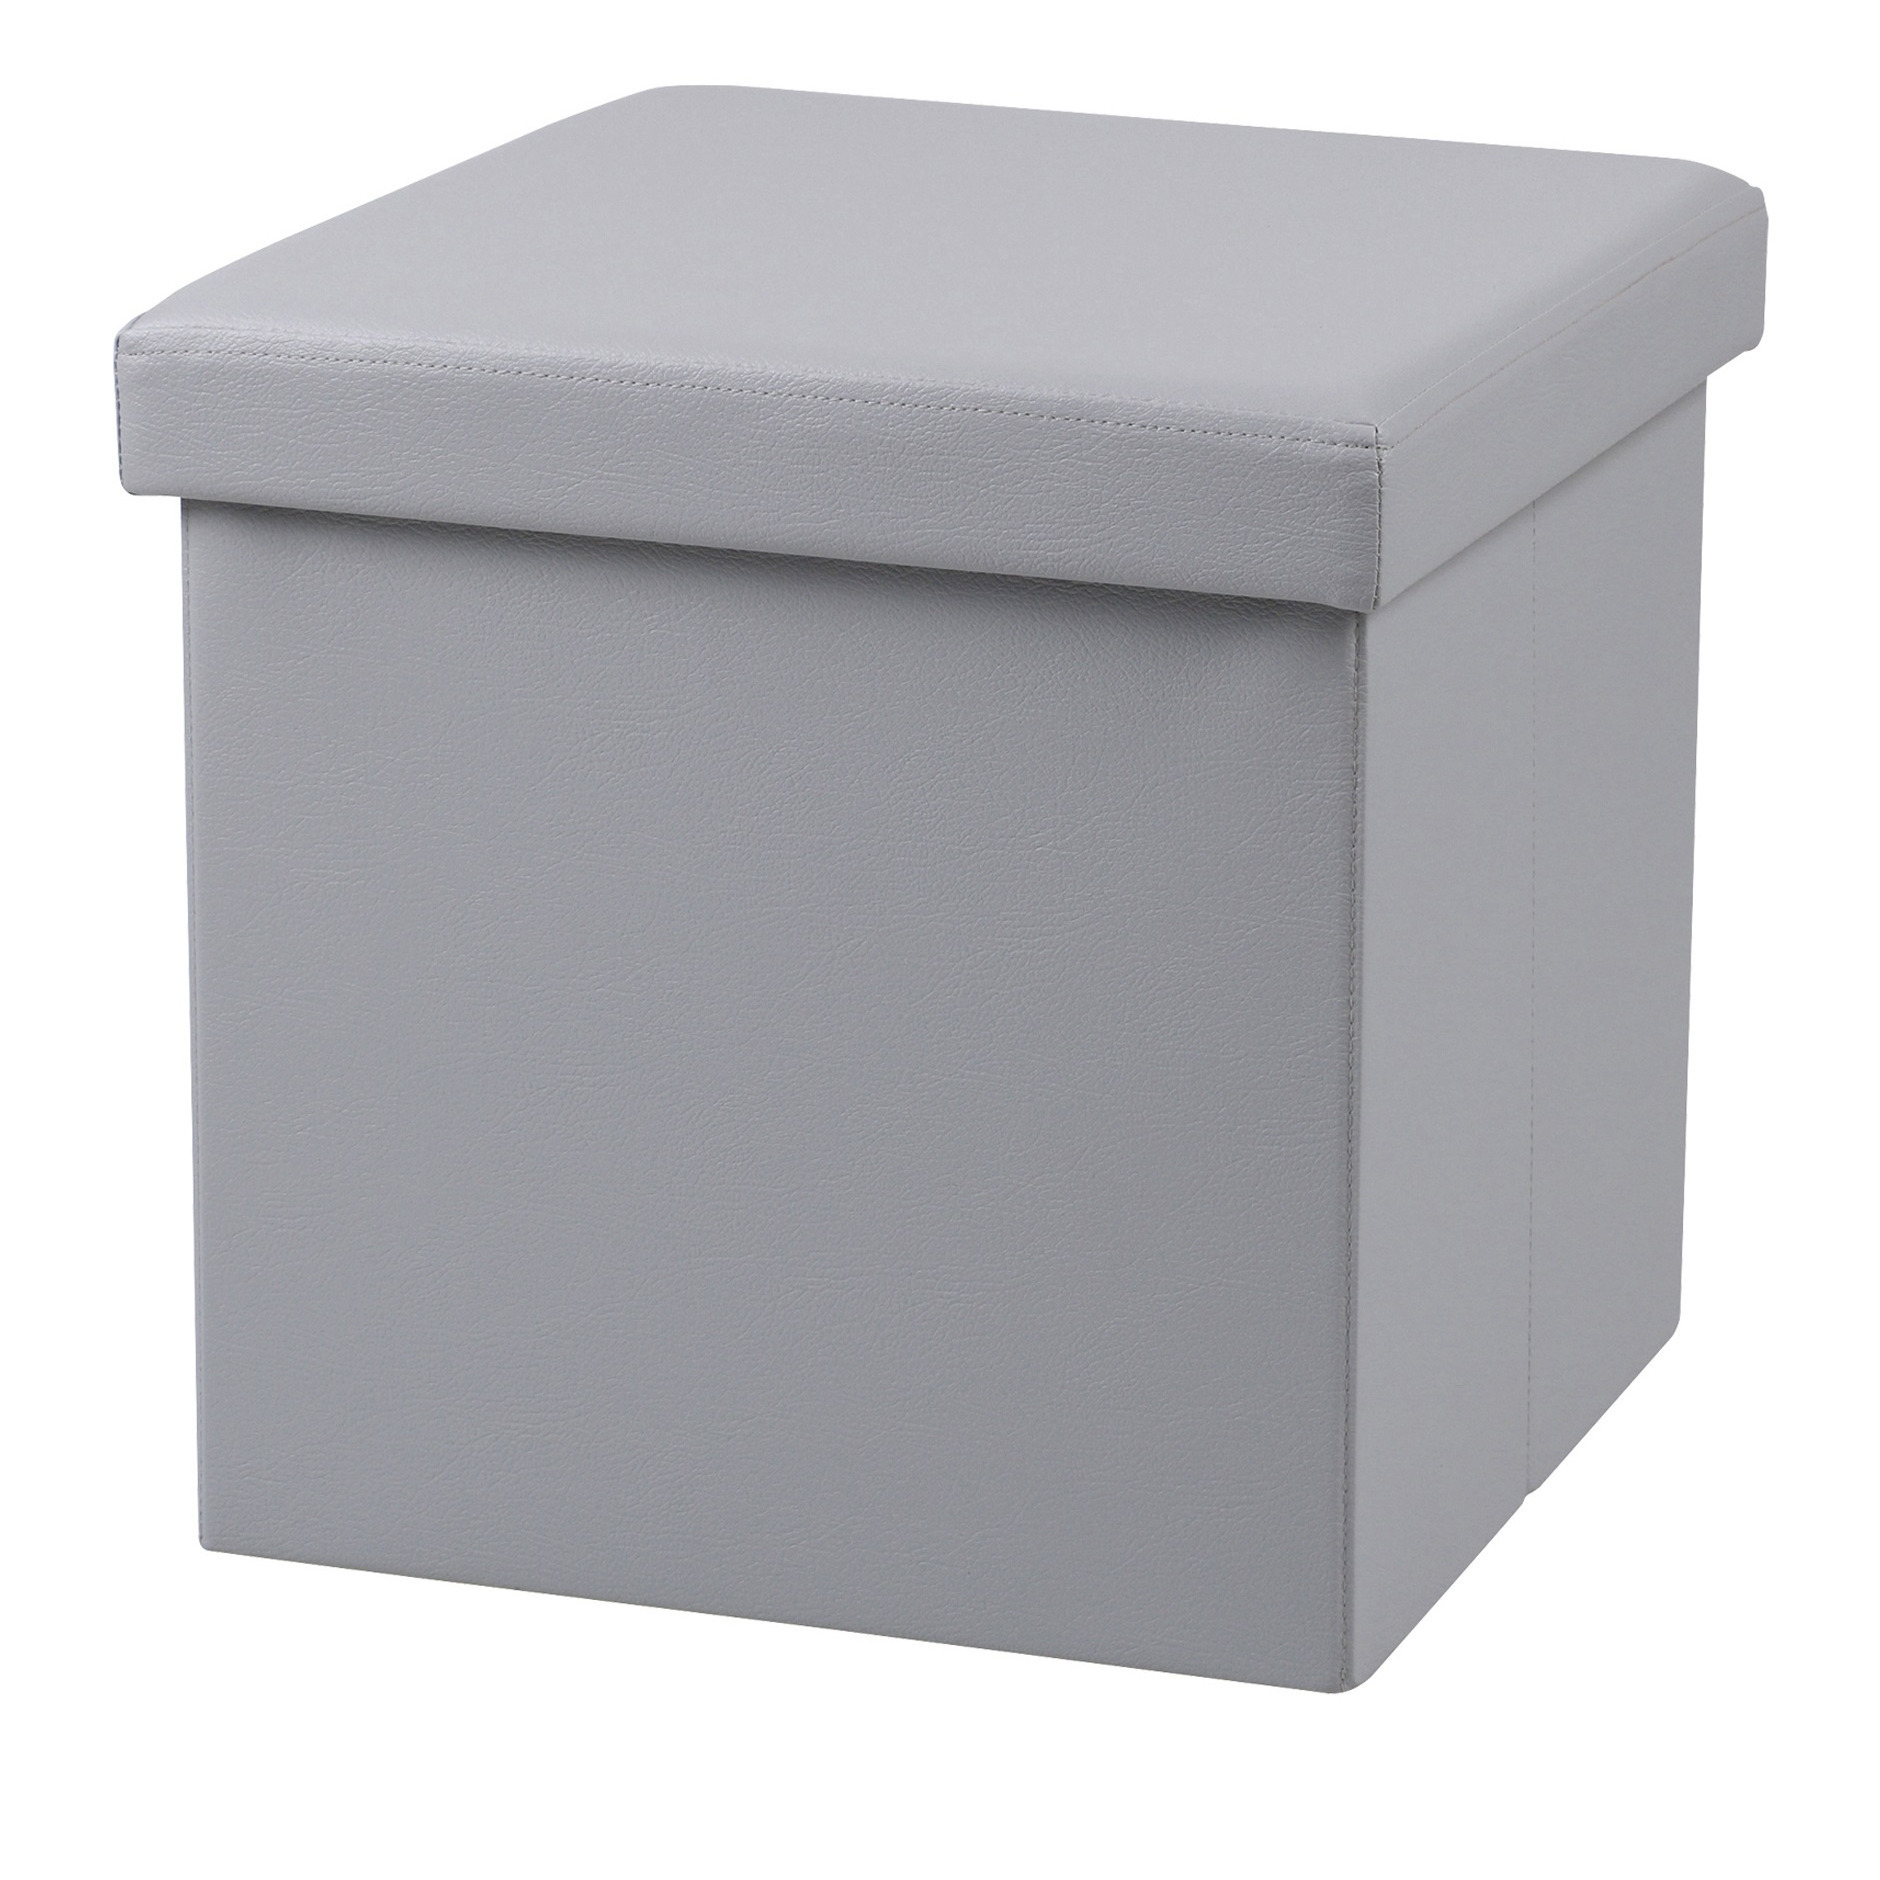 Poef Leather BOX hocker opbergbox lichtgrijs PU-mdf 38 x 38 cm opvouwbaar